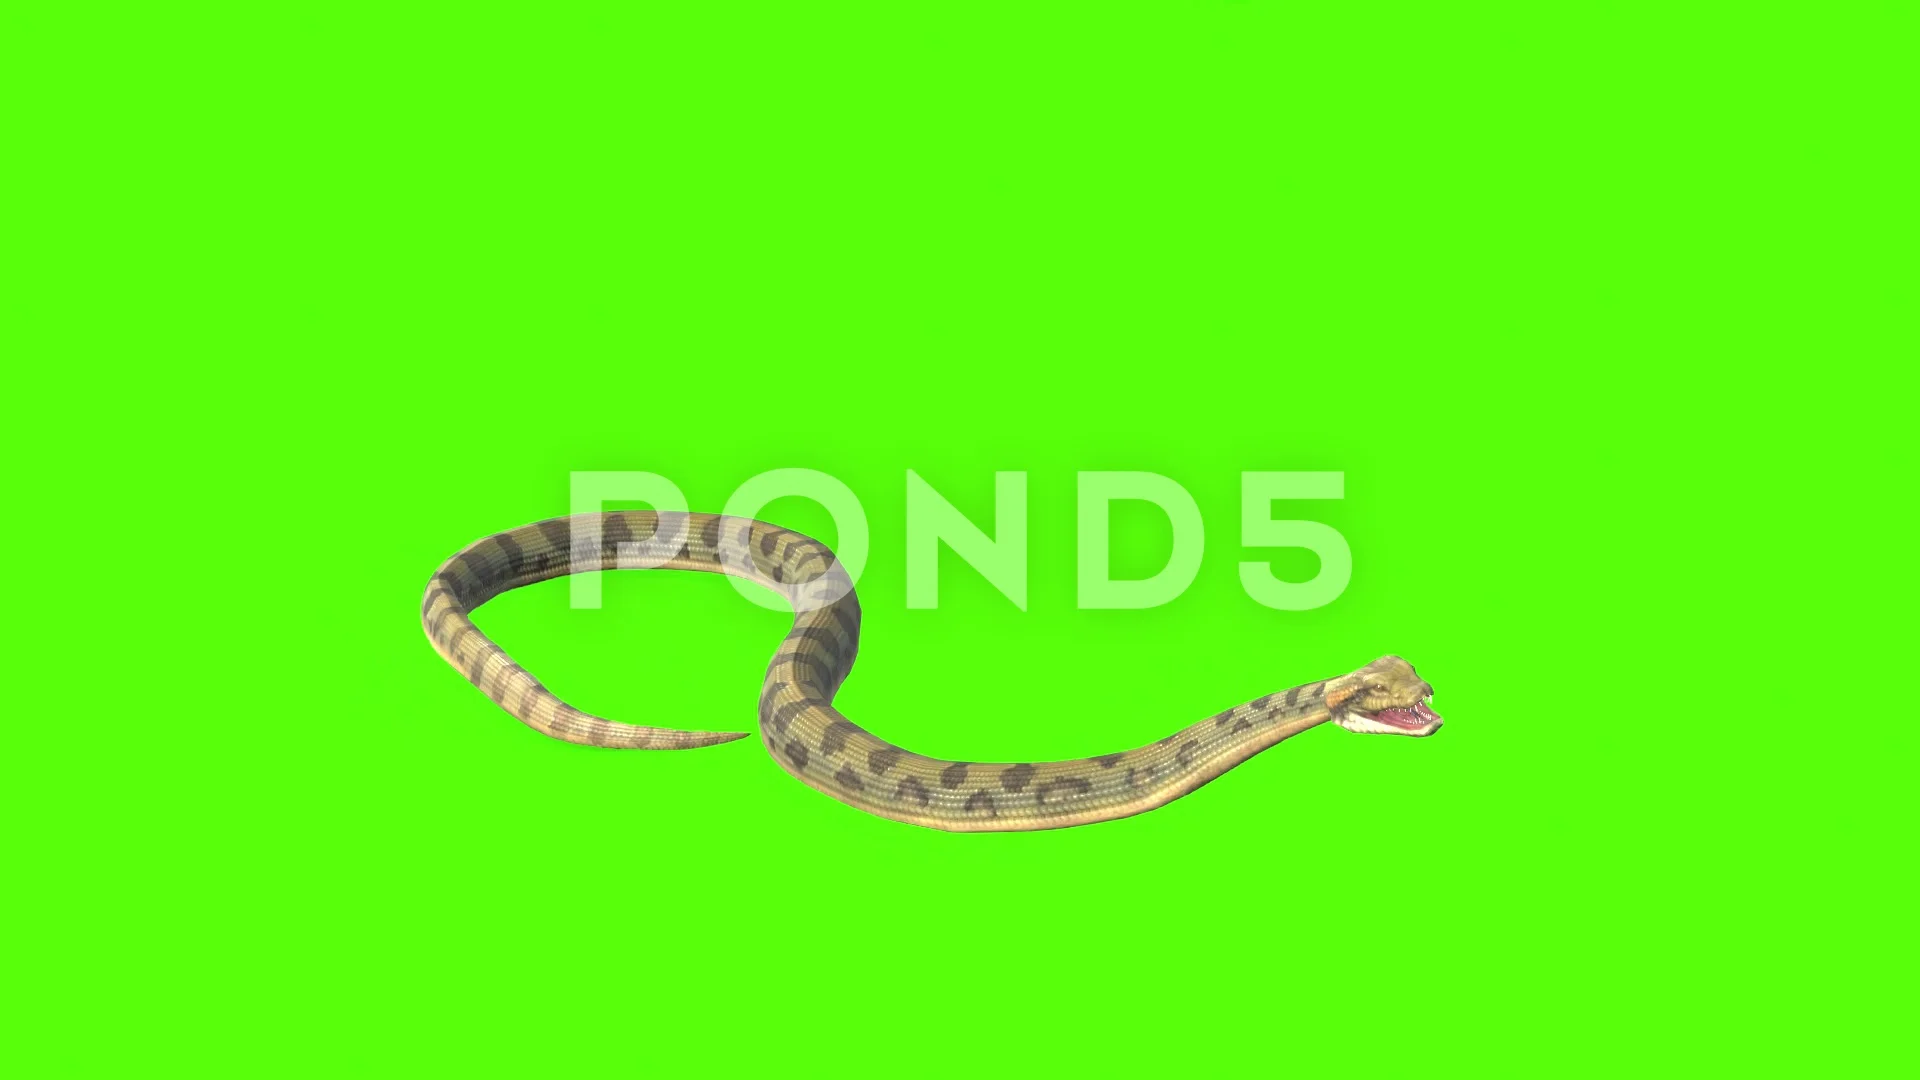 Water Snake Cartoon Porn Videos - Snake Green Screen Stock Footage ~ Royalty Free Stock Videos | Pond5